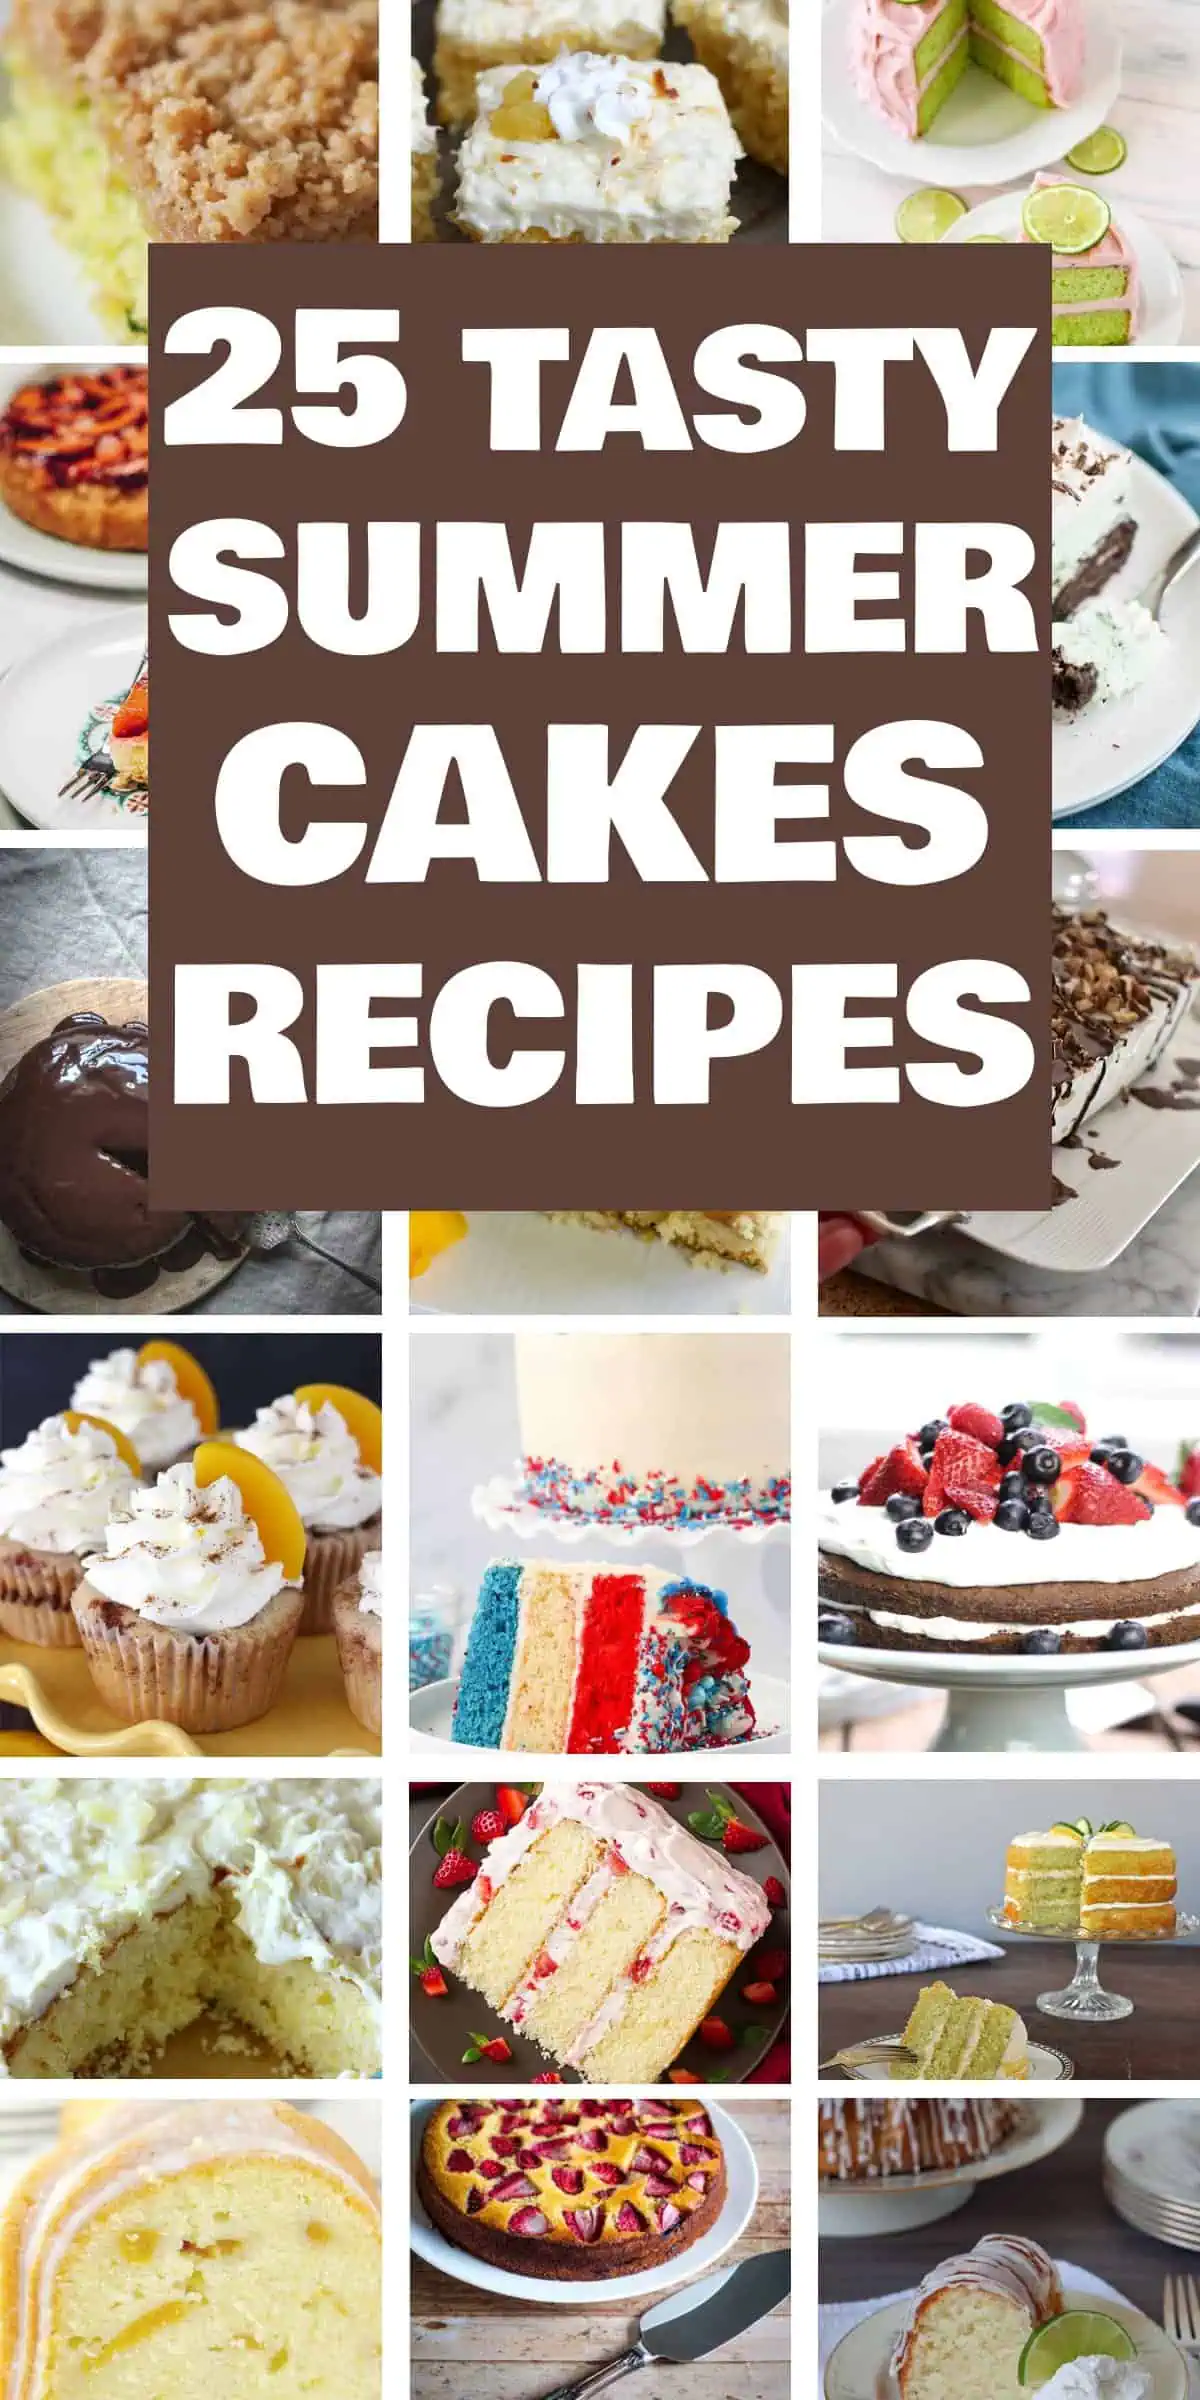 25 Yummy Summer Cakes